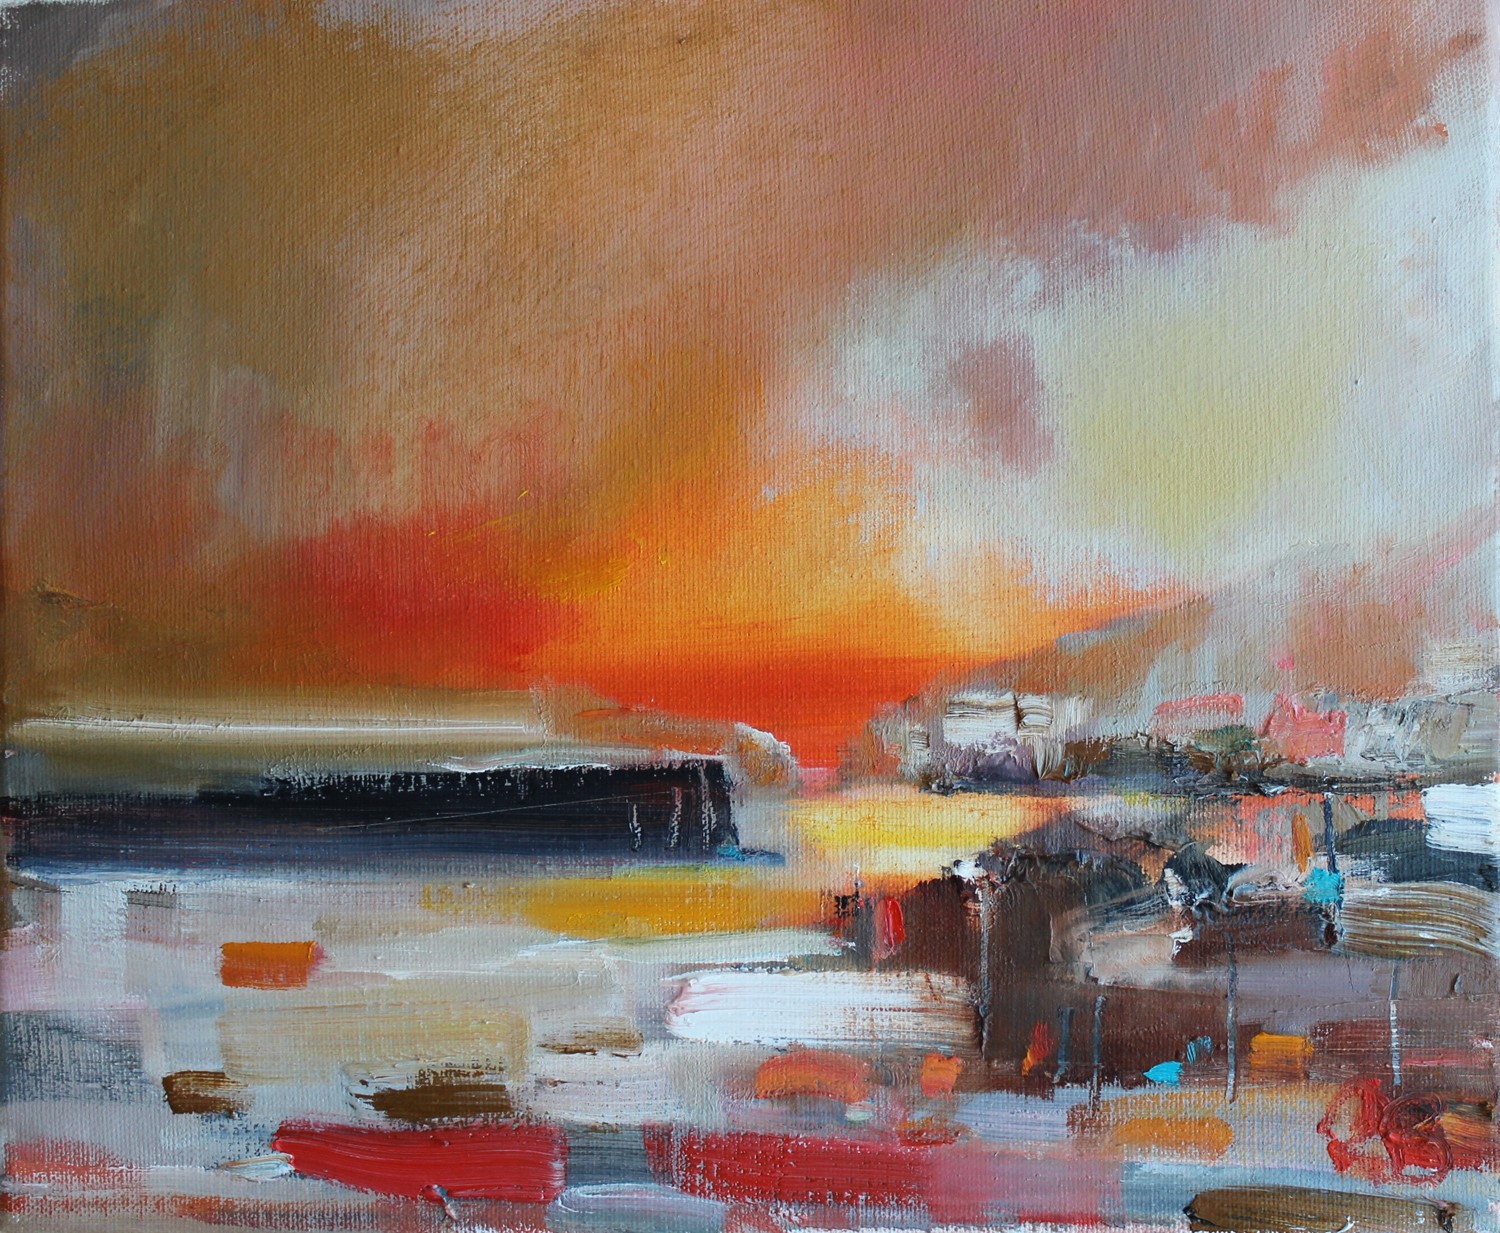 'Pier at Sundown' by artist Rosanne Barr